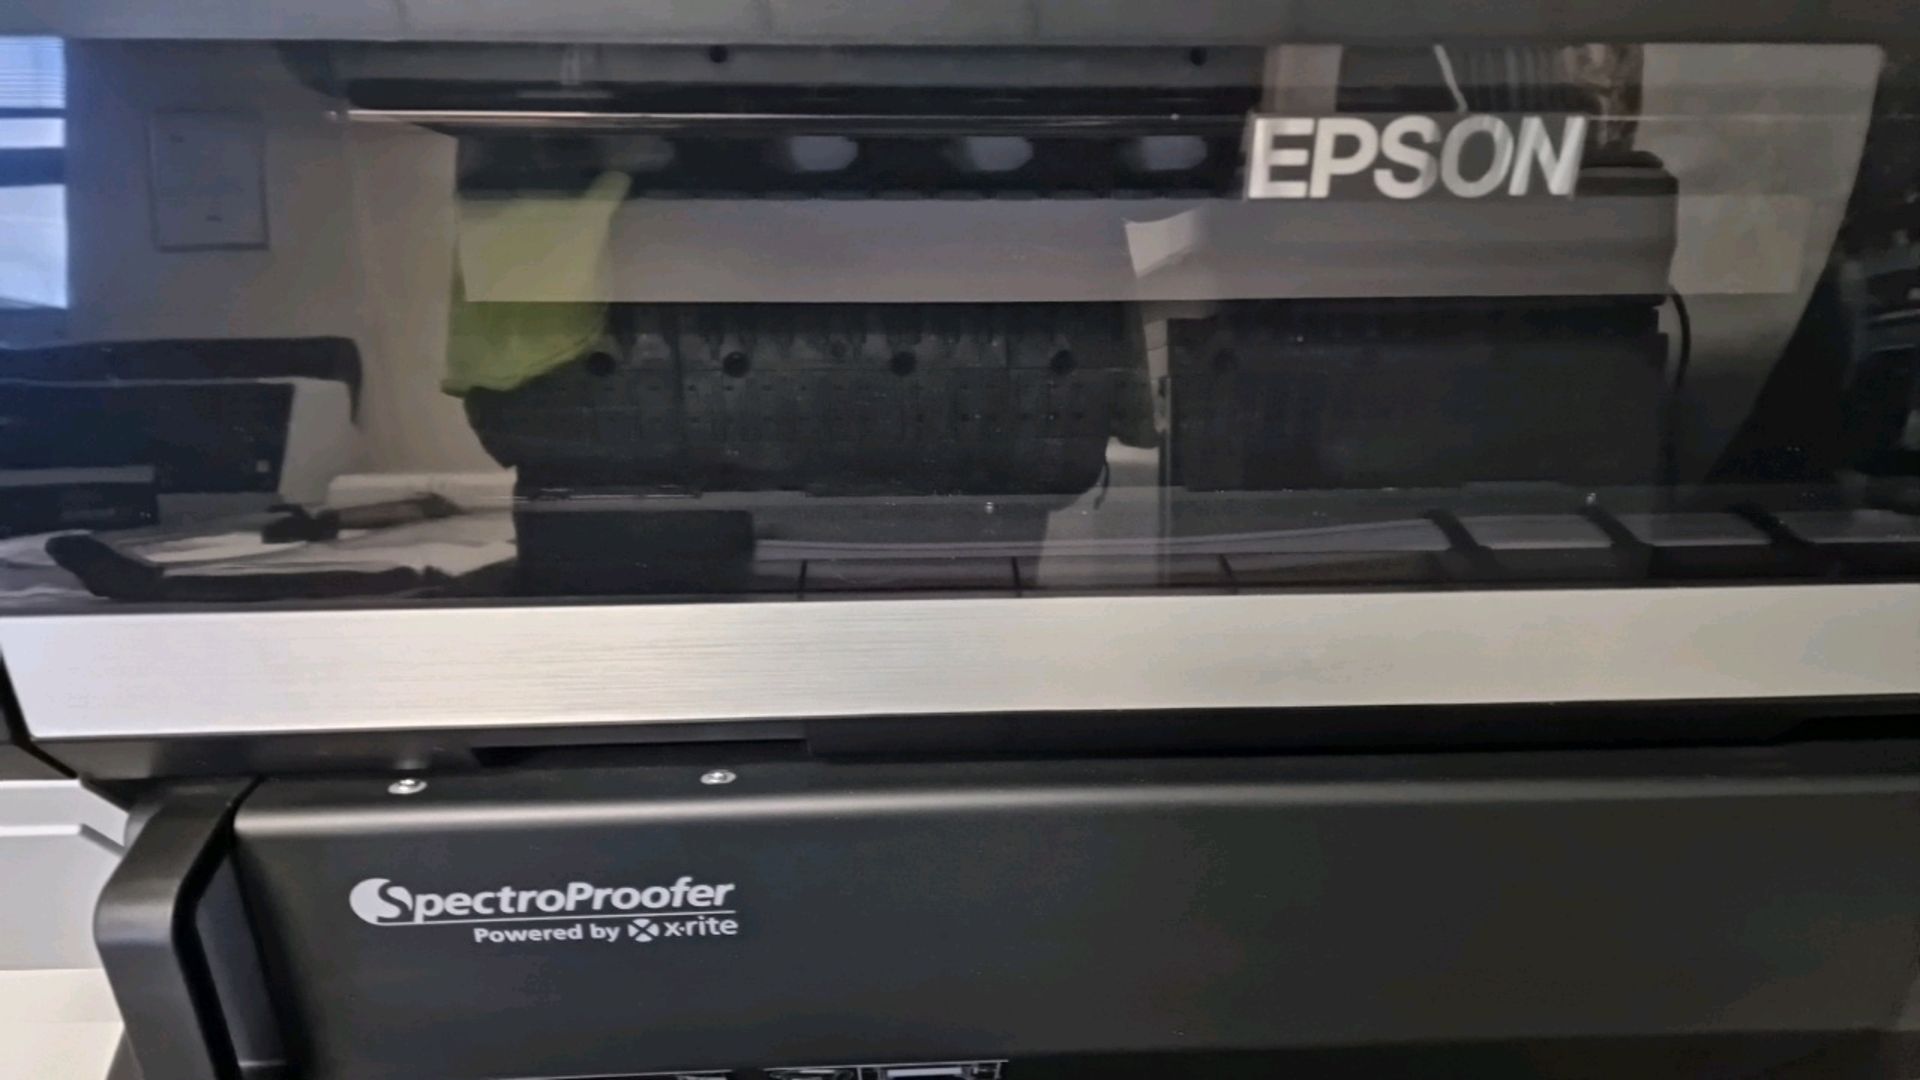 Epson SureColor SC-P7000 Spectro Printer - Image 4 of 7